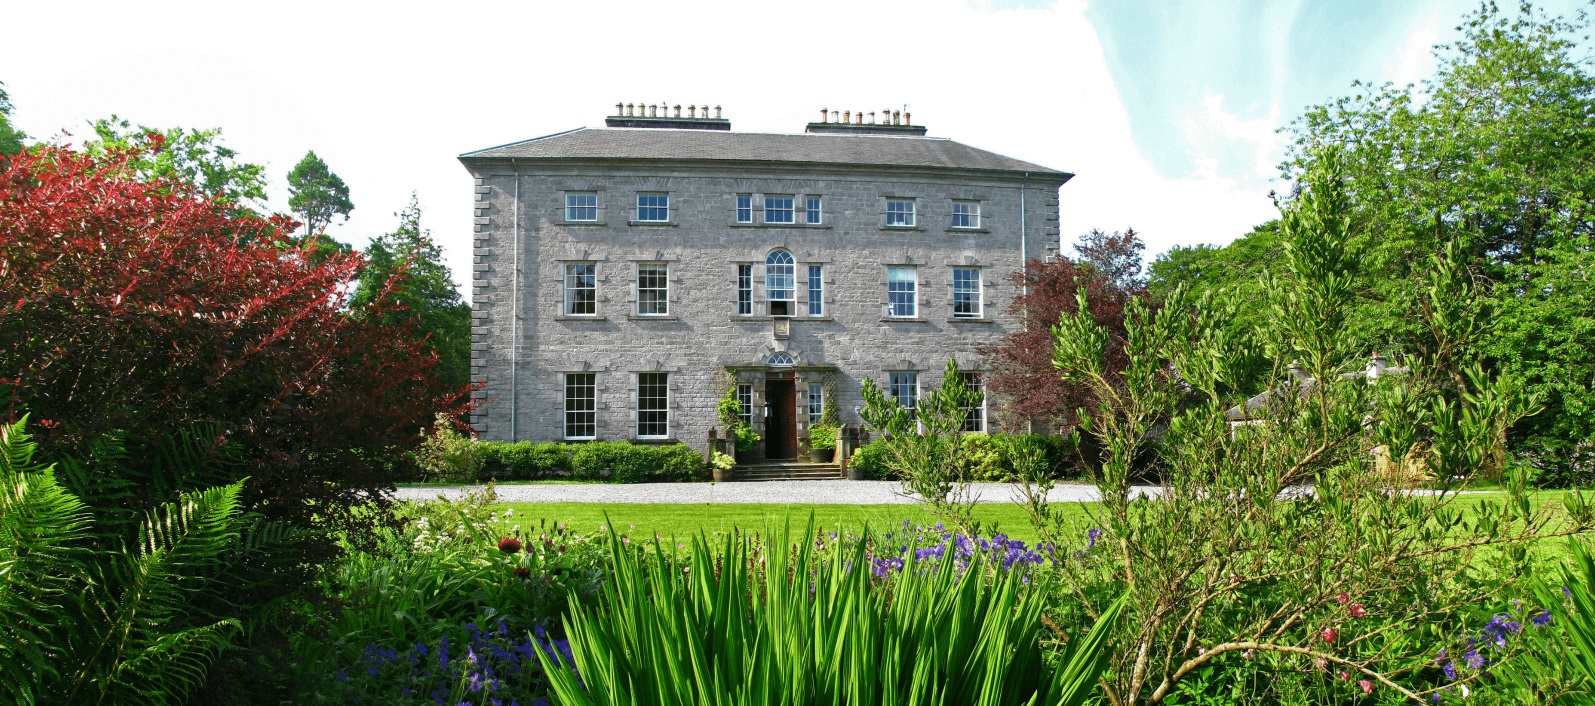 Coopershill House, Co. Sligo